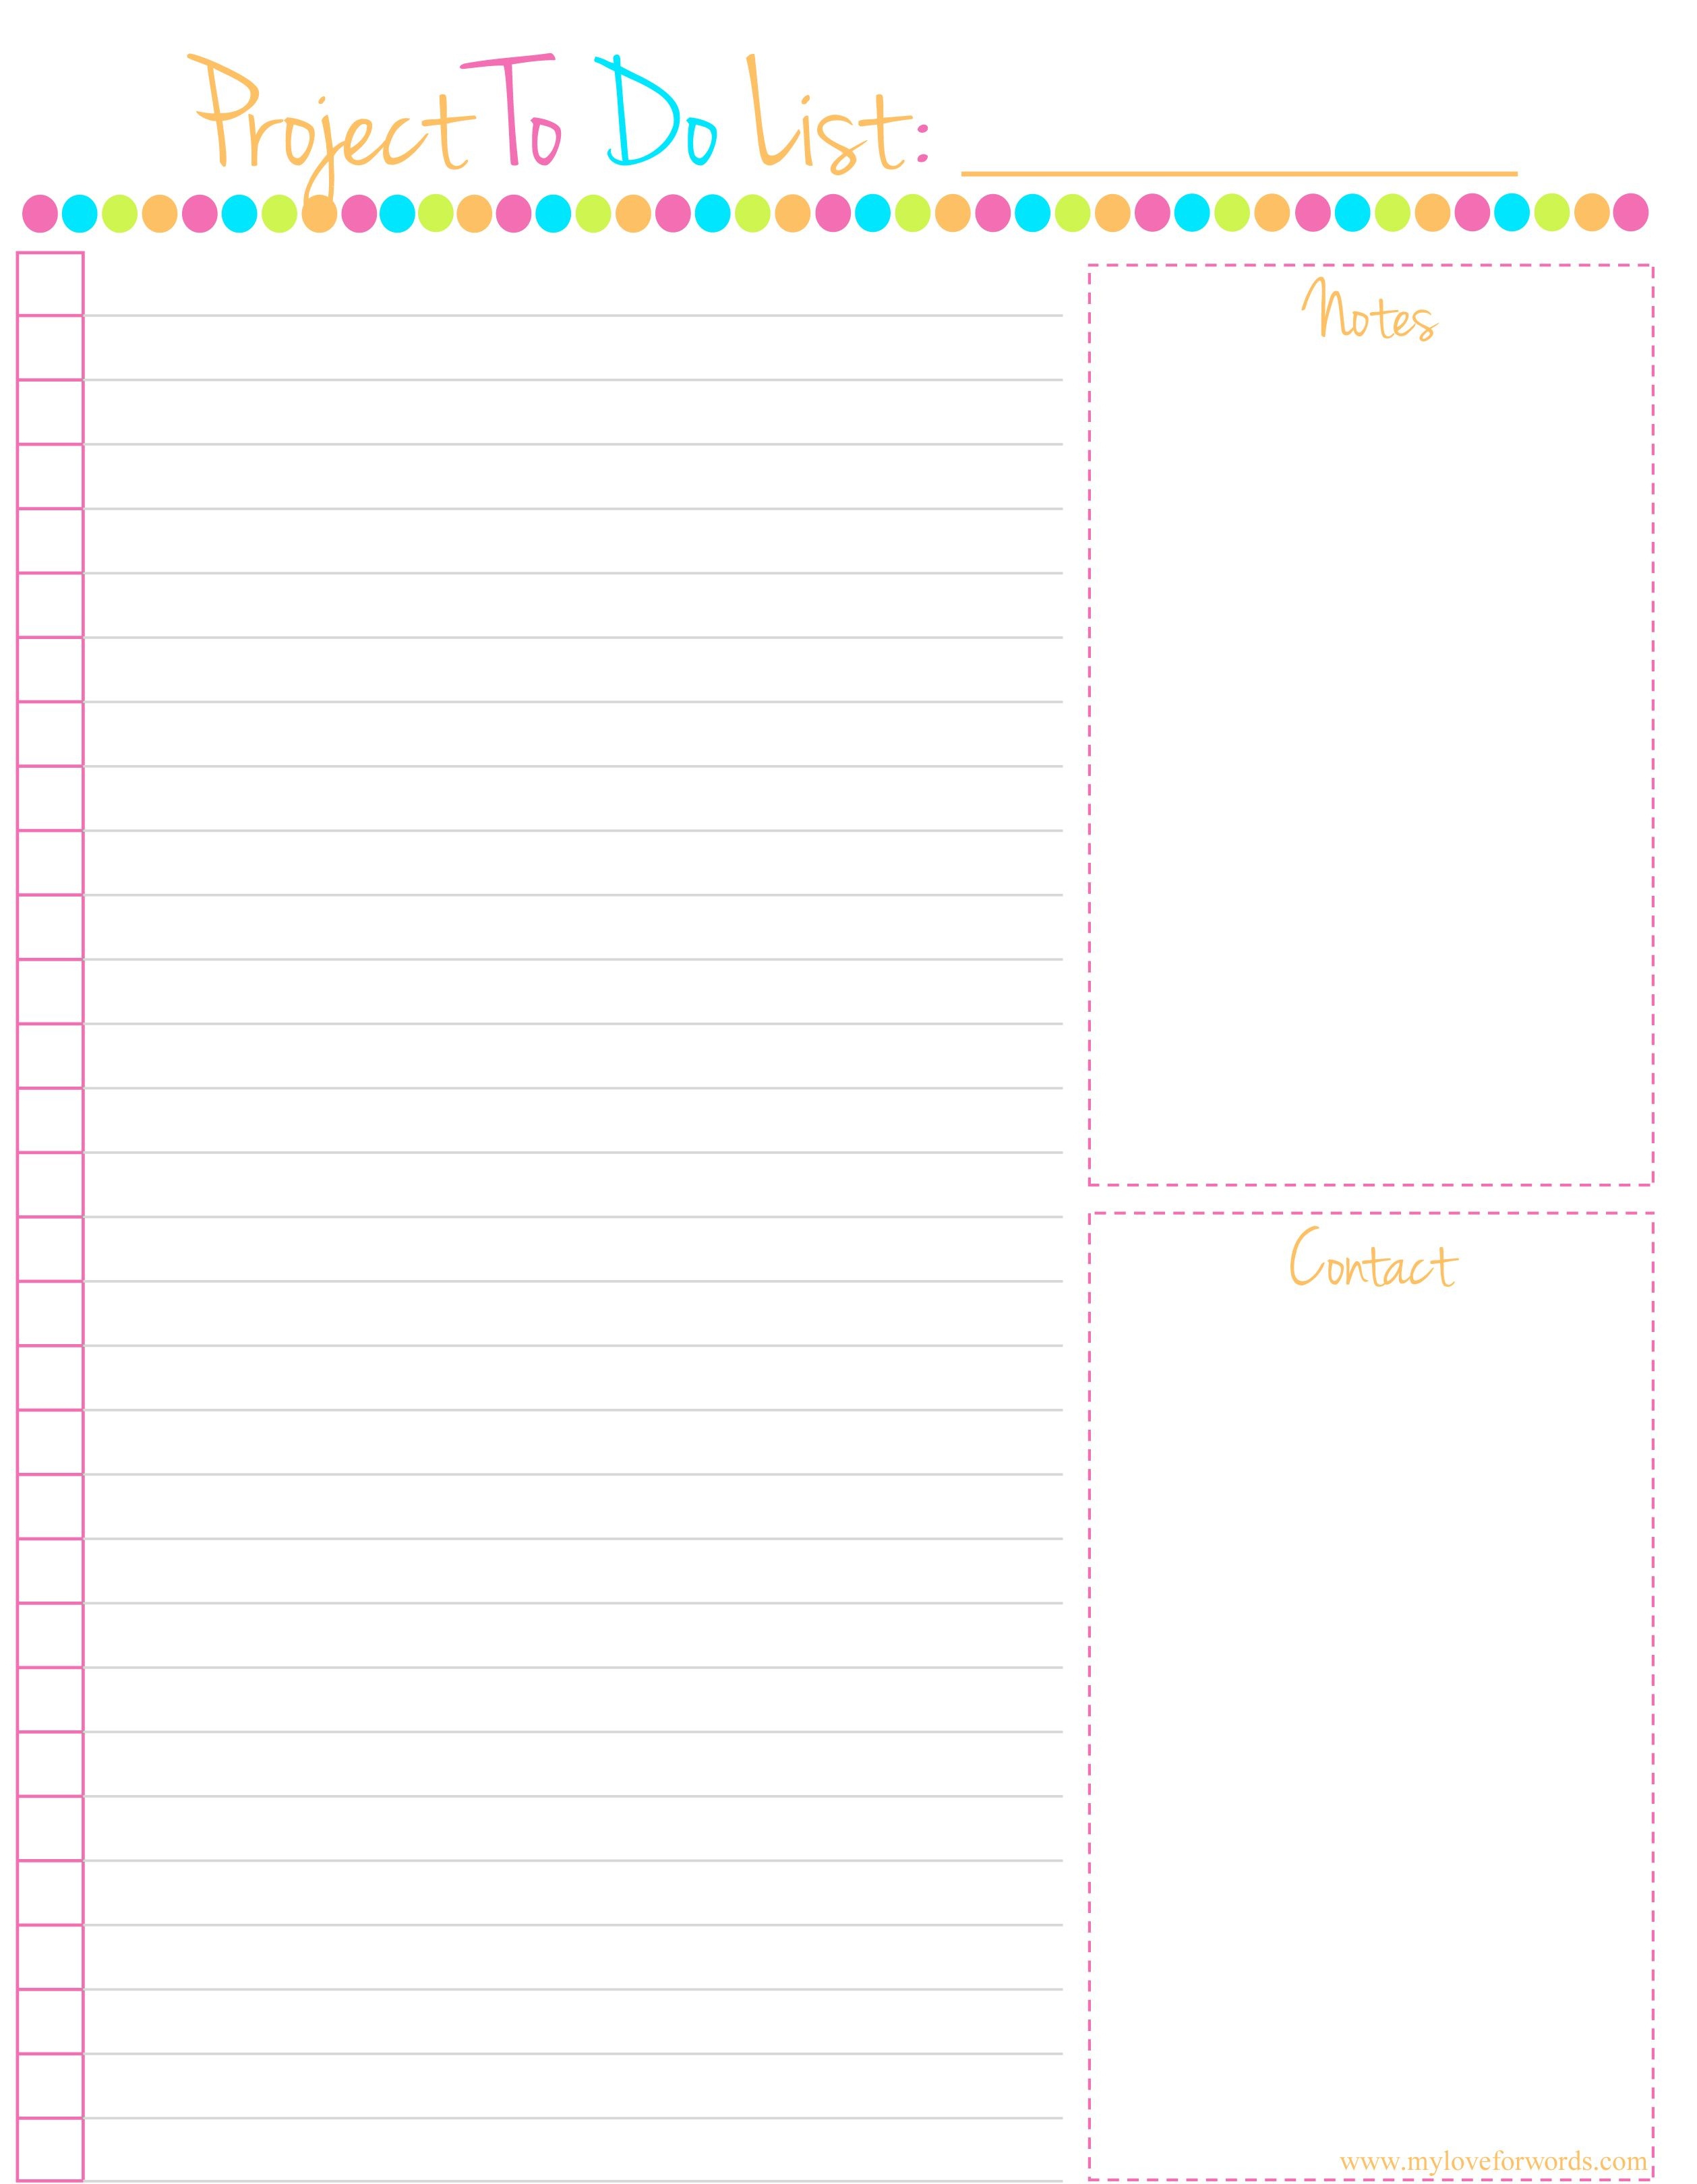 To Do List Printable | Organizing | To Do Lists Printable, Diy - Free Printable To Do Lists To Get Organized